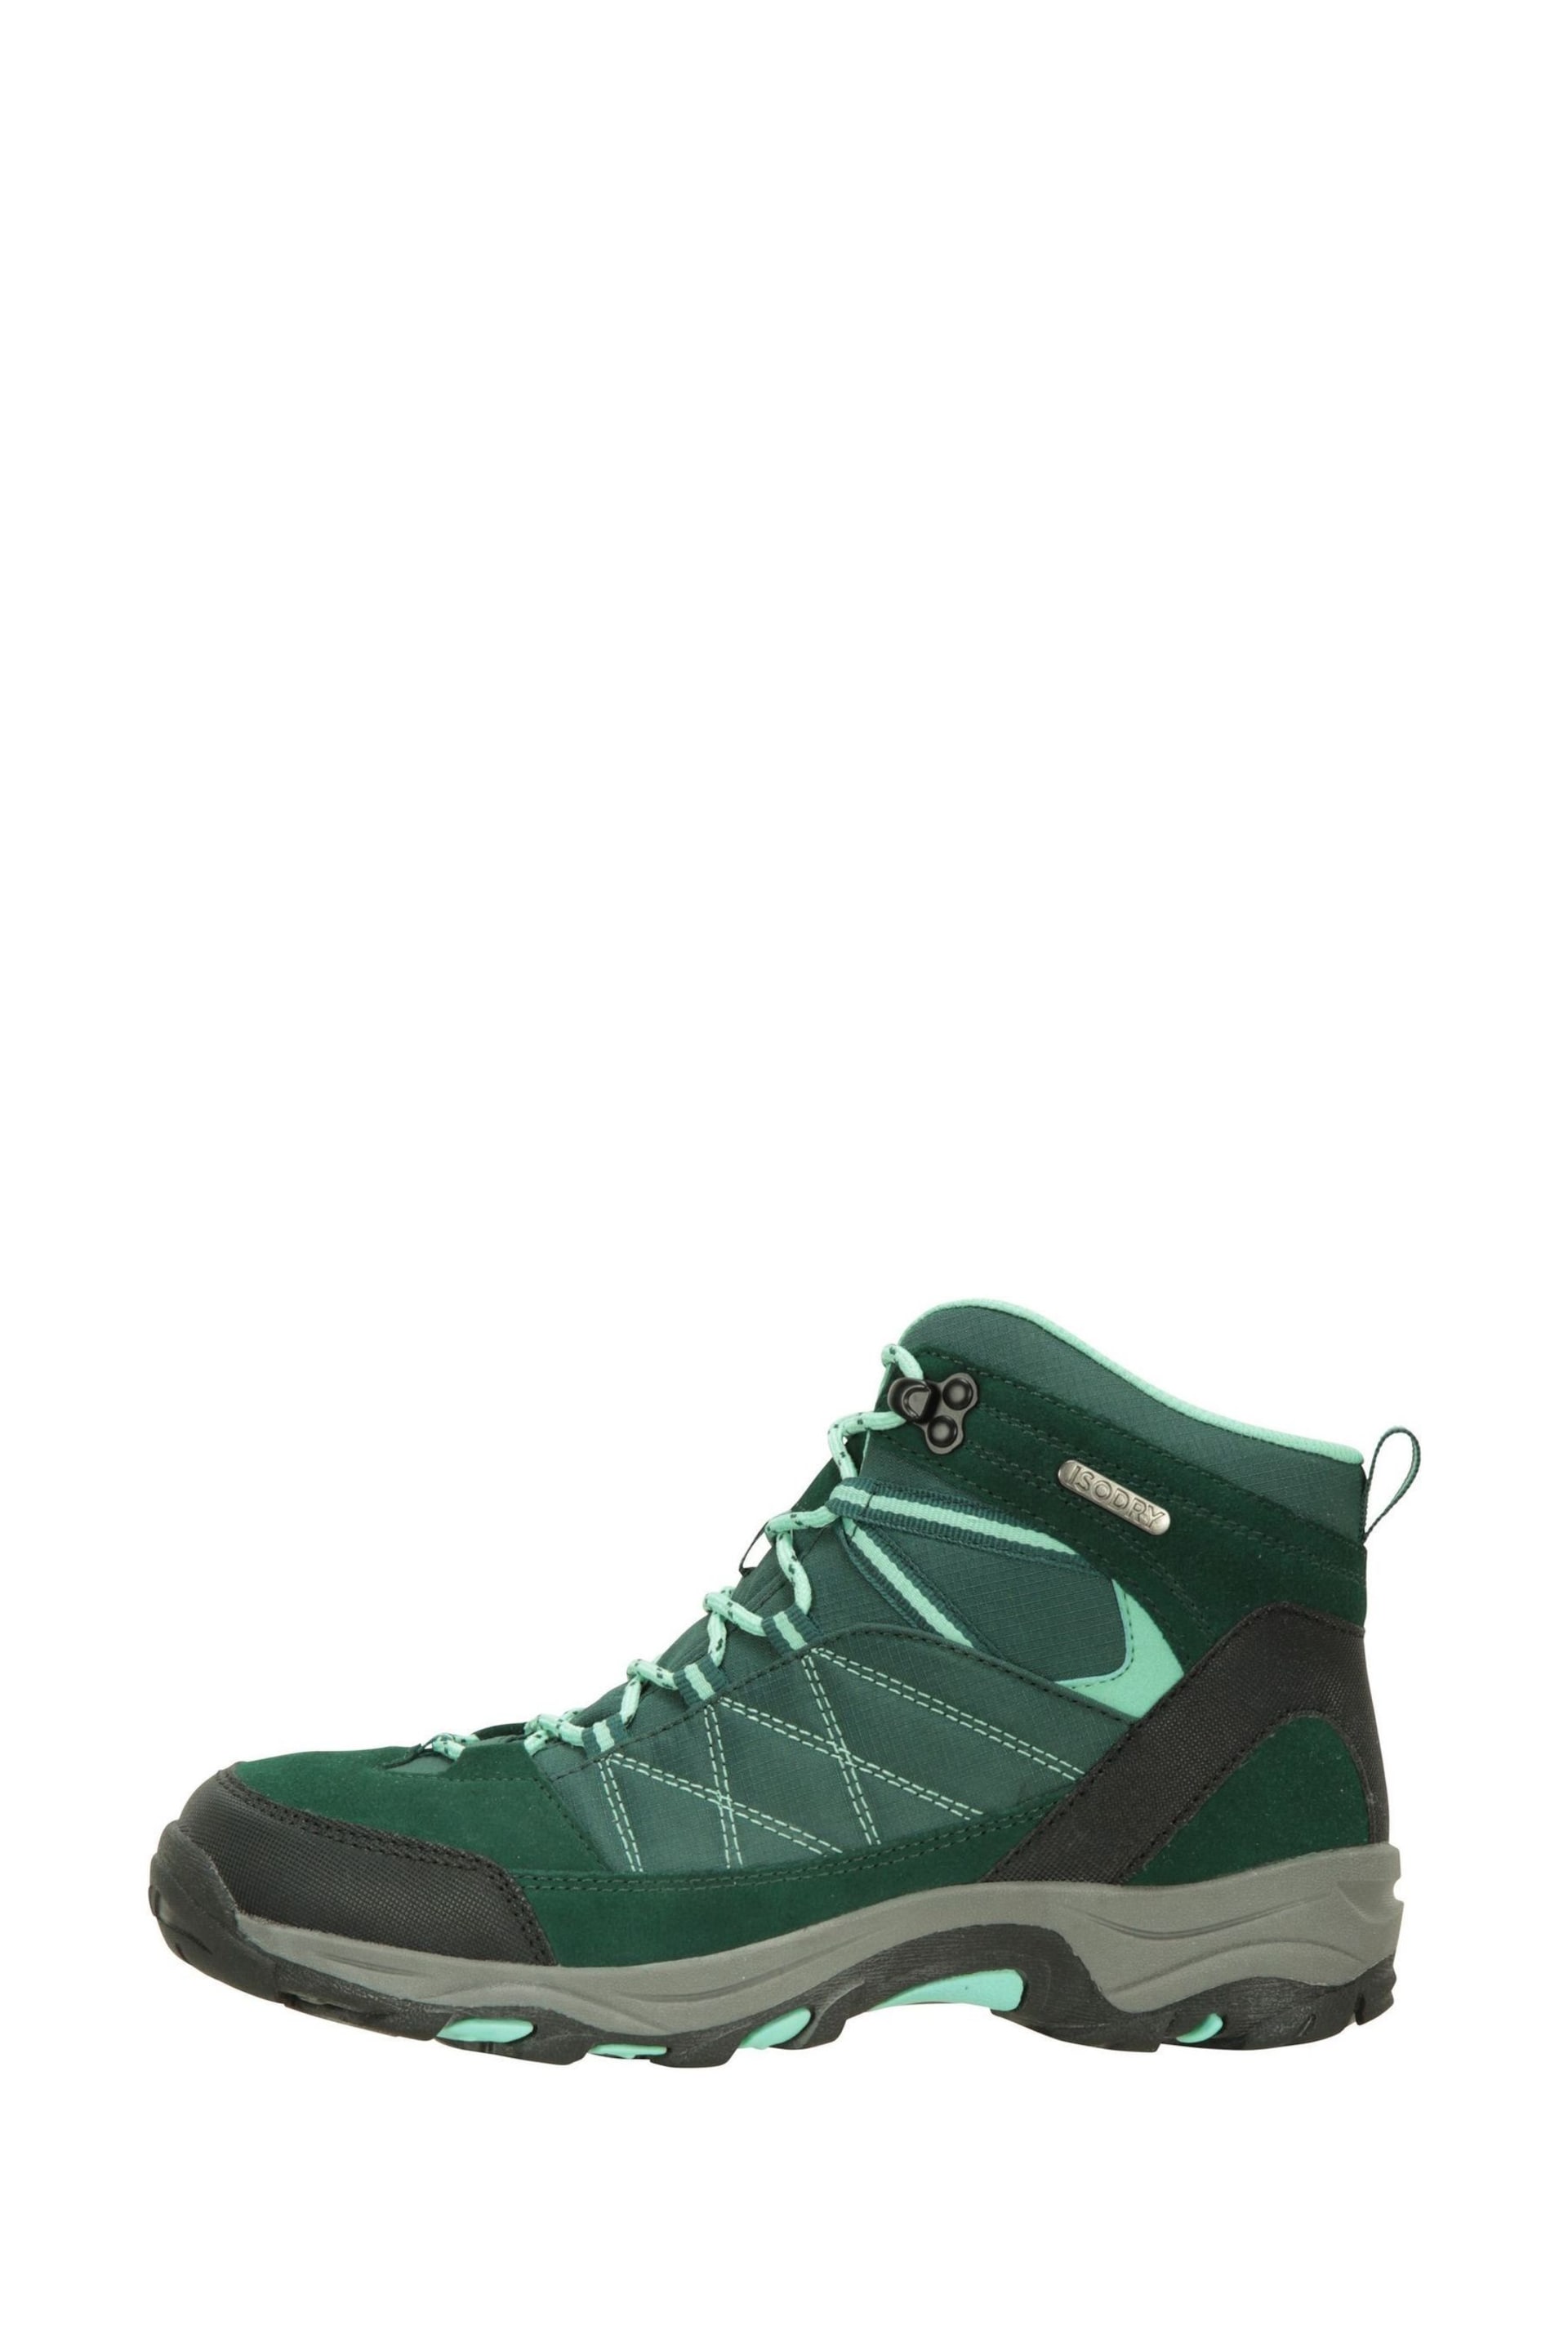 Mountain Warehouse Green Rapid Womens Waterproof Walking Boots - Image 2 of 6